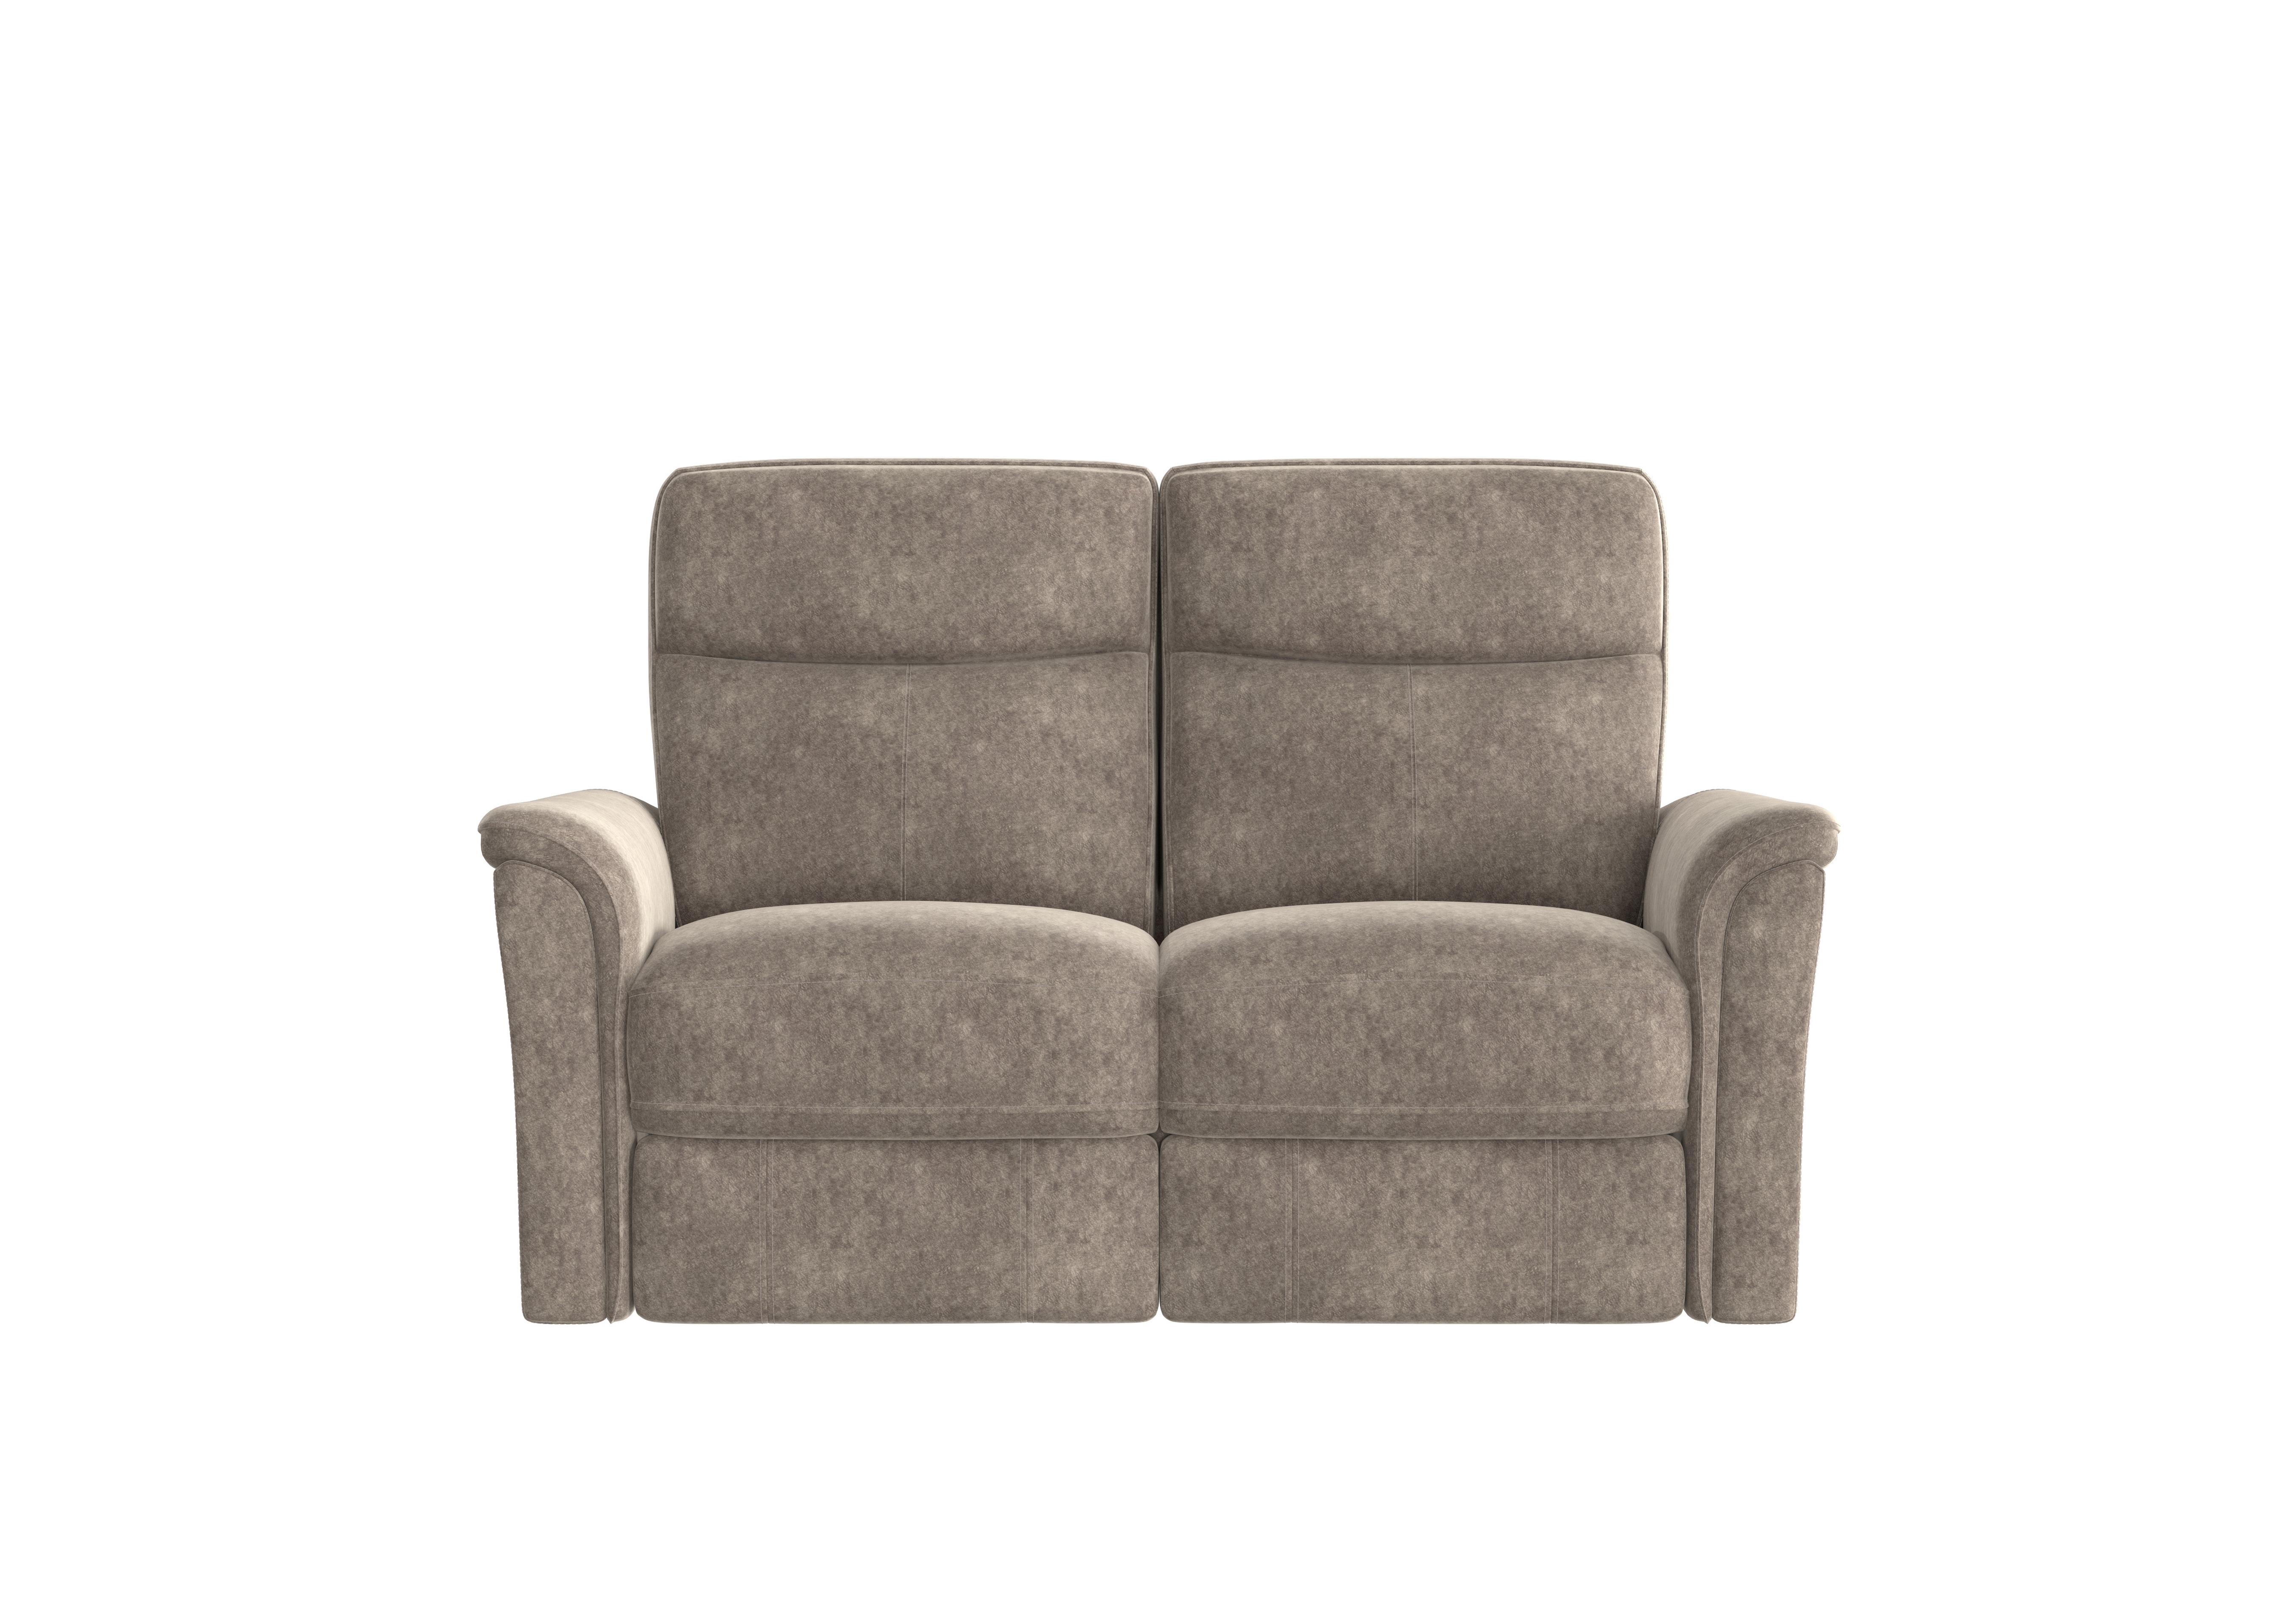 Piccolo 2 Seater Fabric Sofa in Bfa-Bnn-R29 Fv1 Mink on Furniture Village